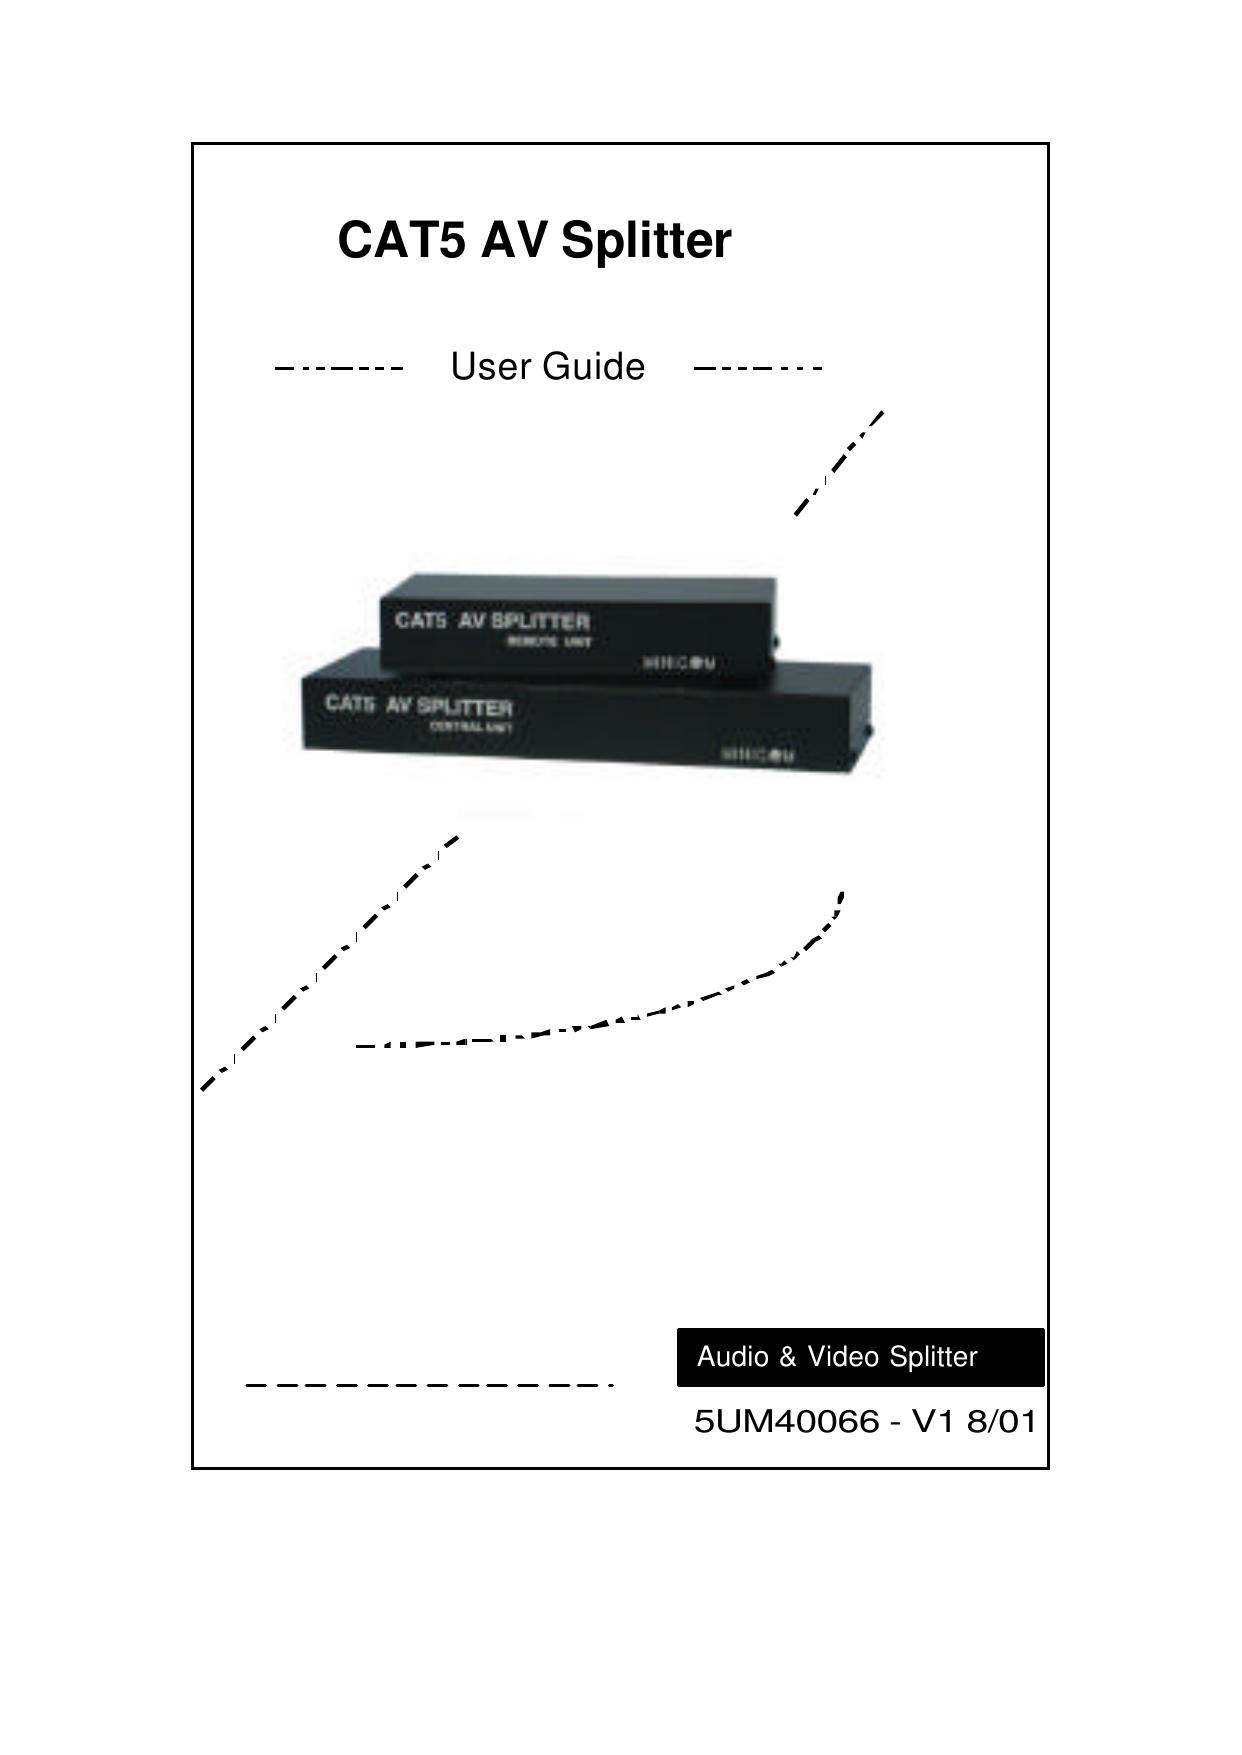 Minicom Advanced Systems 5UM40066 - V1 8/01 Log Splitter User Manual